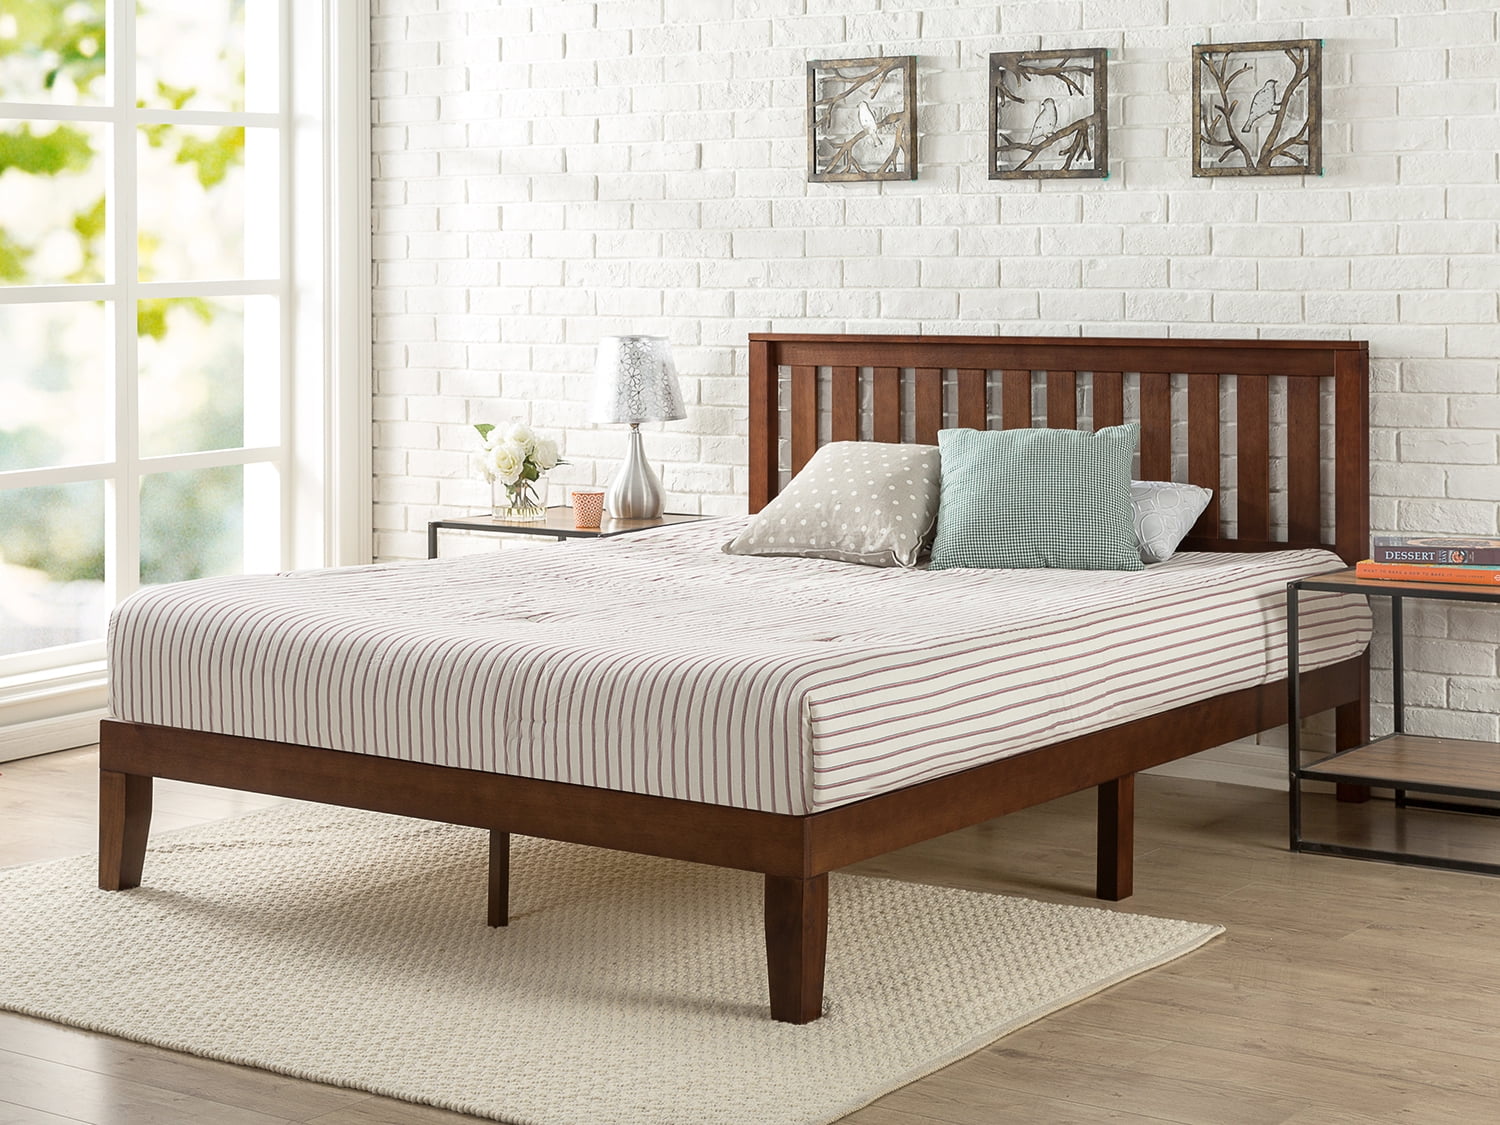 Zinus Vivek 37” Wood Platform Bed Frame, Full - Walmart.com - Walmart.com